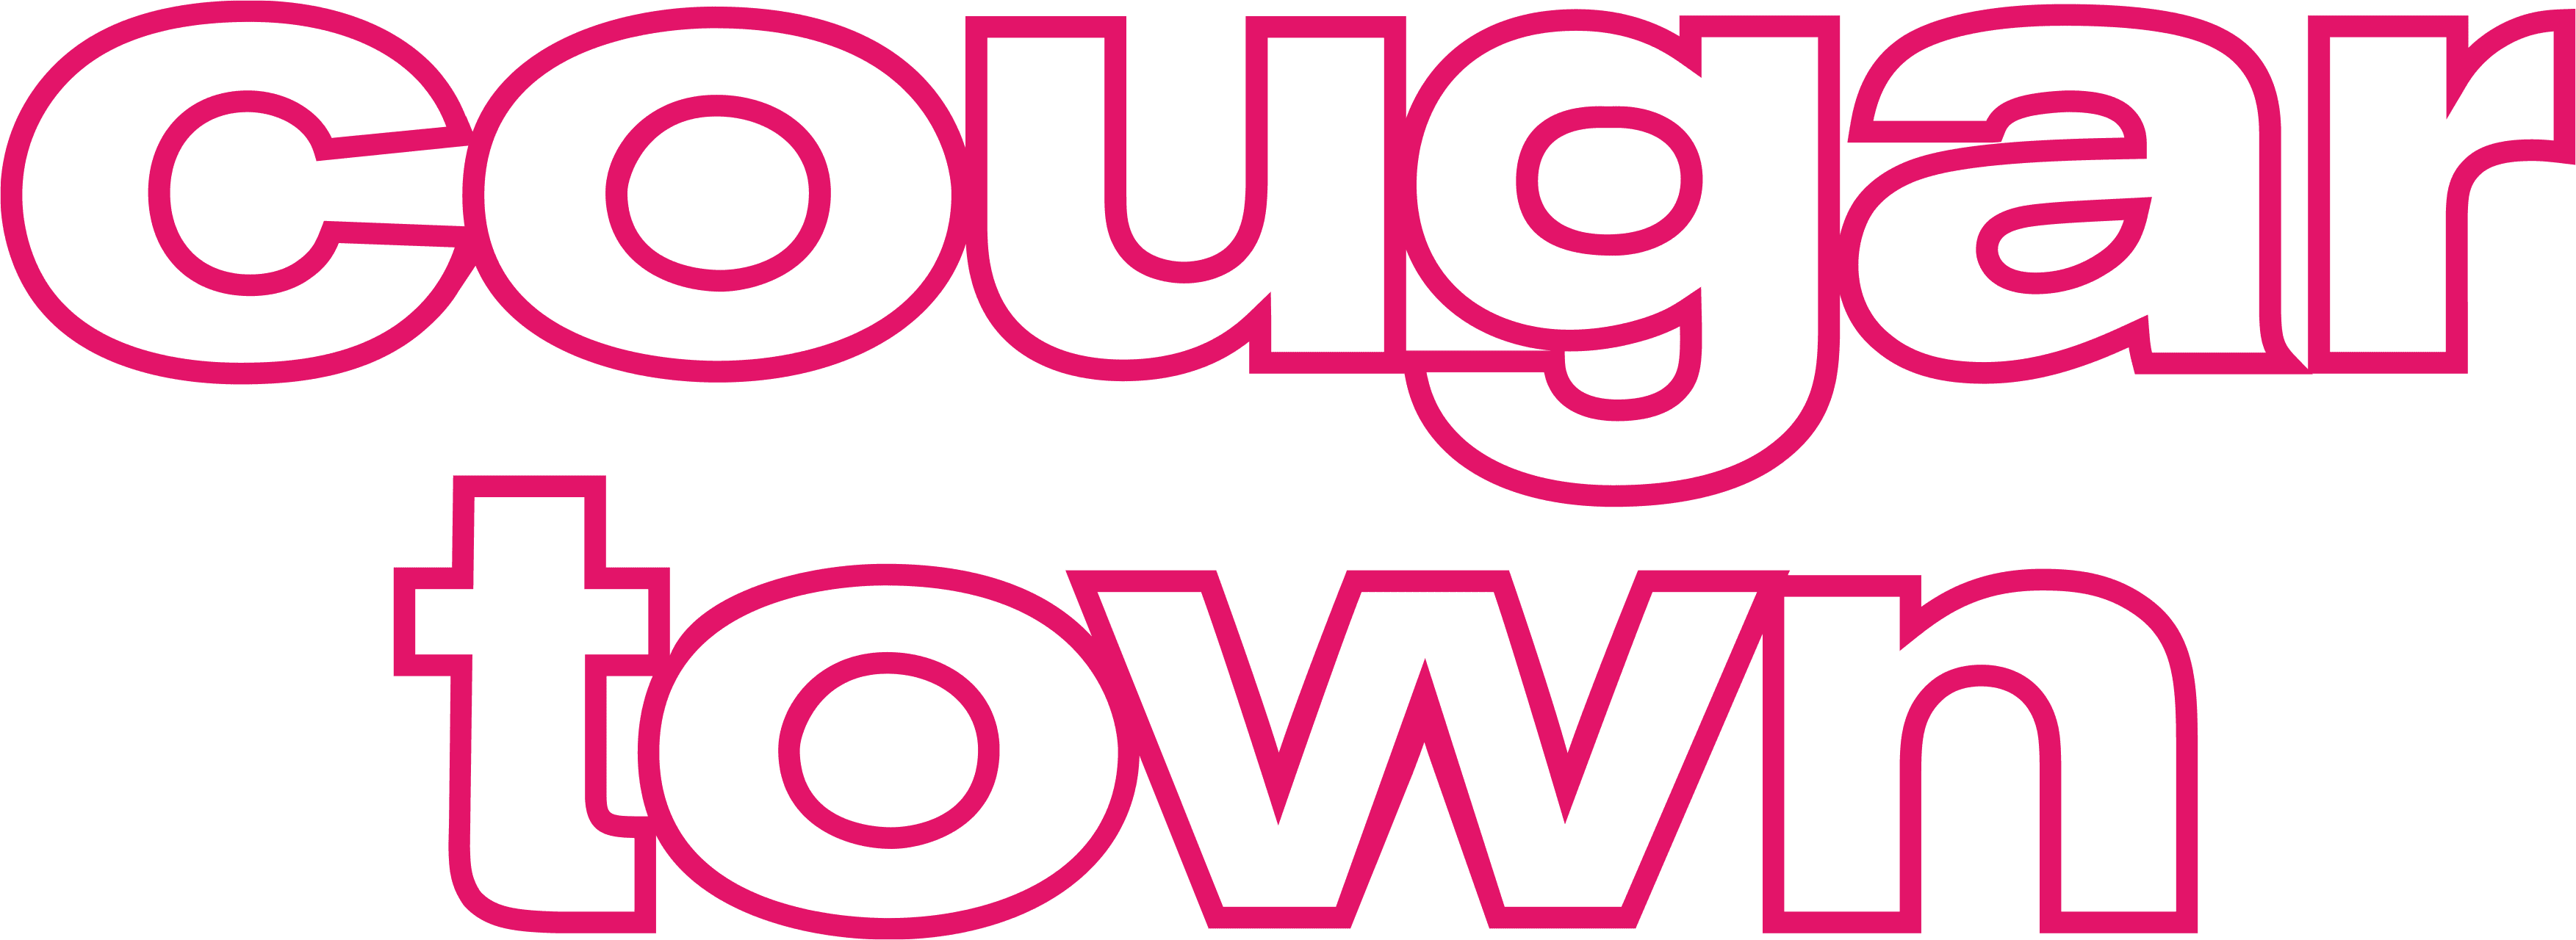 Cougar Town logo